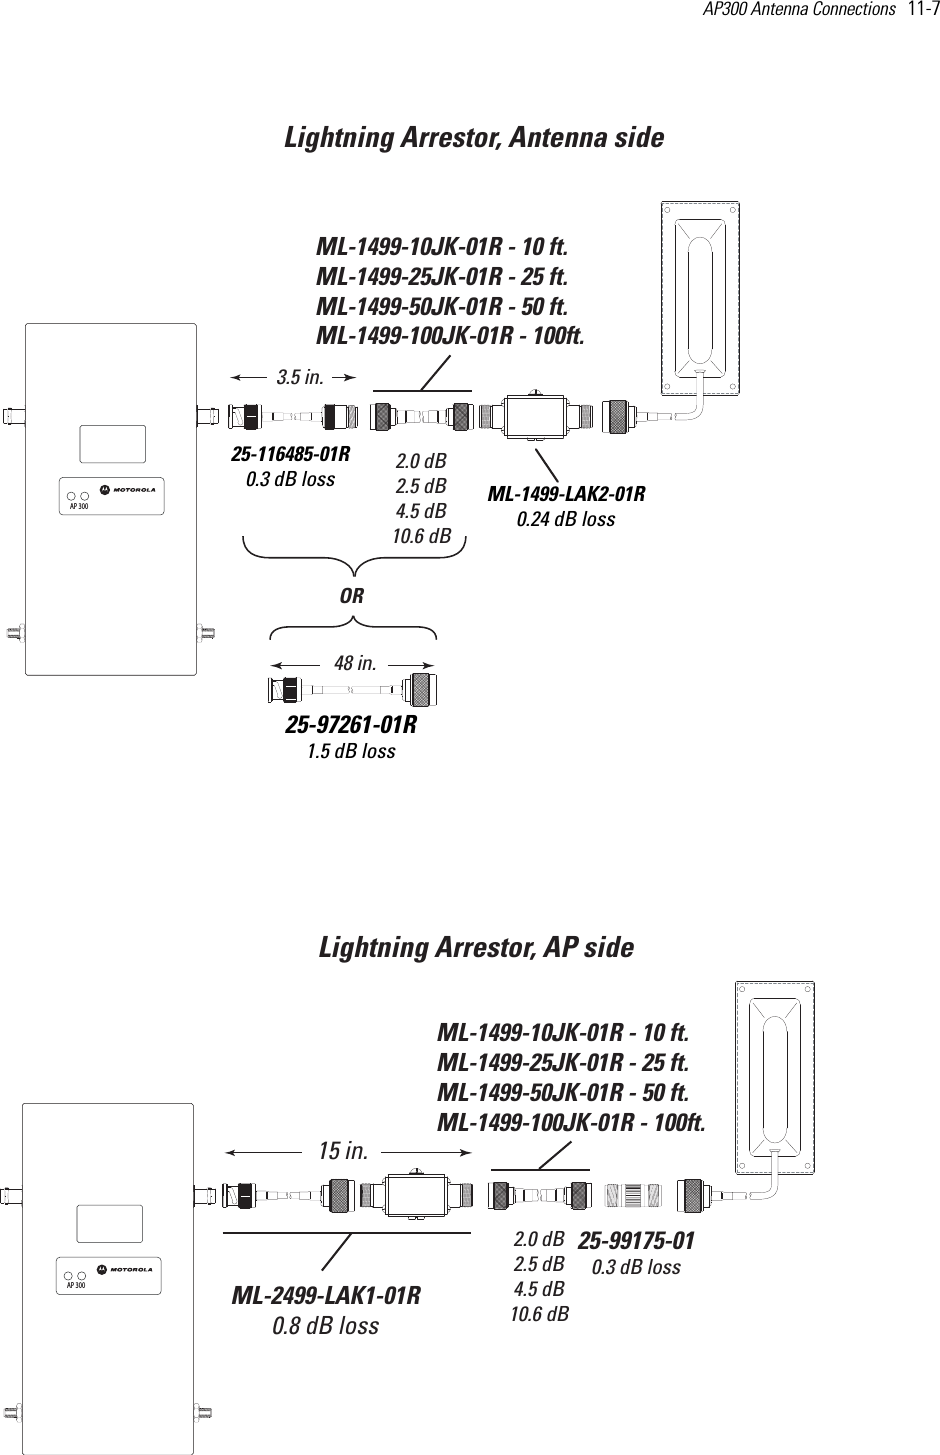 AP300 Antenna Connections   11-7 Lightning Arrestor, AP sideLightning Arrestor, Antenna sideML-1499-10JK-01R - 10 ft.ML-1499-25JK-01R - 25 ft.ML-1499-50JK-01R - 50 ft.ML-1499-100JK-01R - 100ft. 2.0 dB2.5 dB4.5 dB10.6 dB25-97261-01R1.5 dB loss48 in.ORML-1499-LAK2-01R0.24 dB loss25-99175-010.3 dB lossML-2499-LAK1-01R0.8 dB loss15 in.ML-1499-10JK-01R - 10 ft.ML-1499-25JK-01R - 25 ft.ML-1499-50JK-01R - 50 ft.ML-1499-100JK-01R - 100ft. 2.0 dB2.5 dB4.5 dB10.6 dBAP 300AP 30025-116485-01R0.3 dB loss3.5 in.